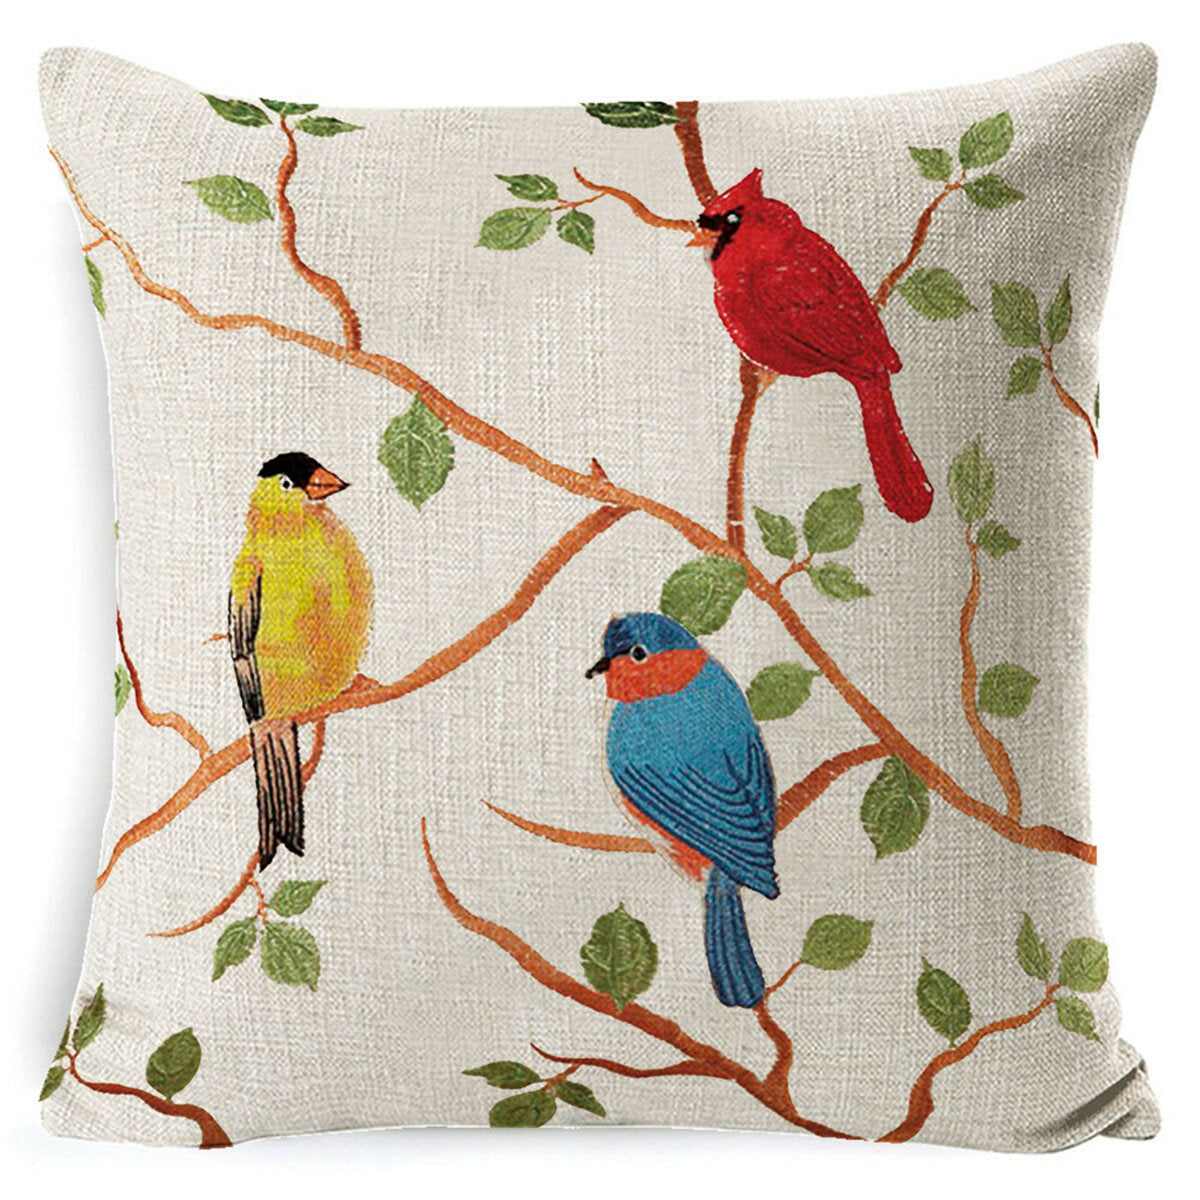 1pc Linen Pillow Cover 45x45cm Flower Bird Pattern Pillowcase Household Sofa Decorative Cushion Cover Supplies